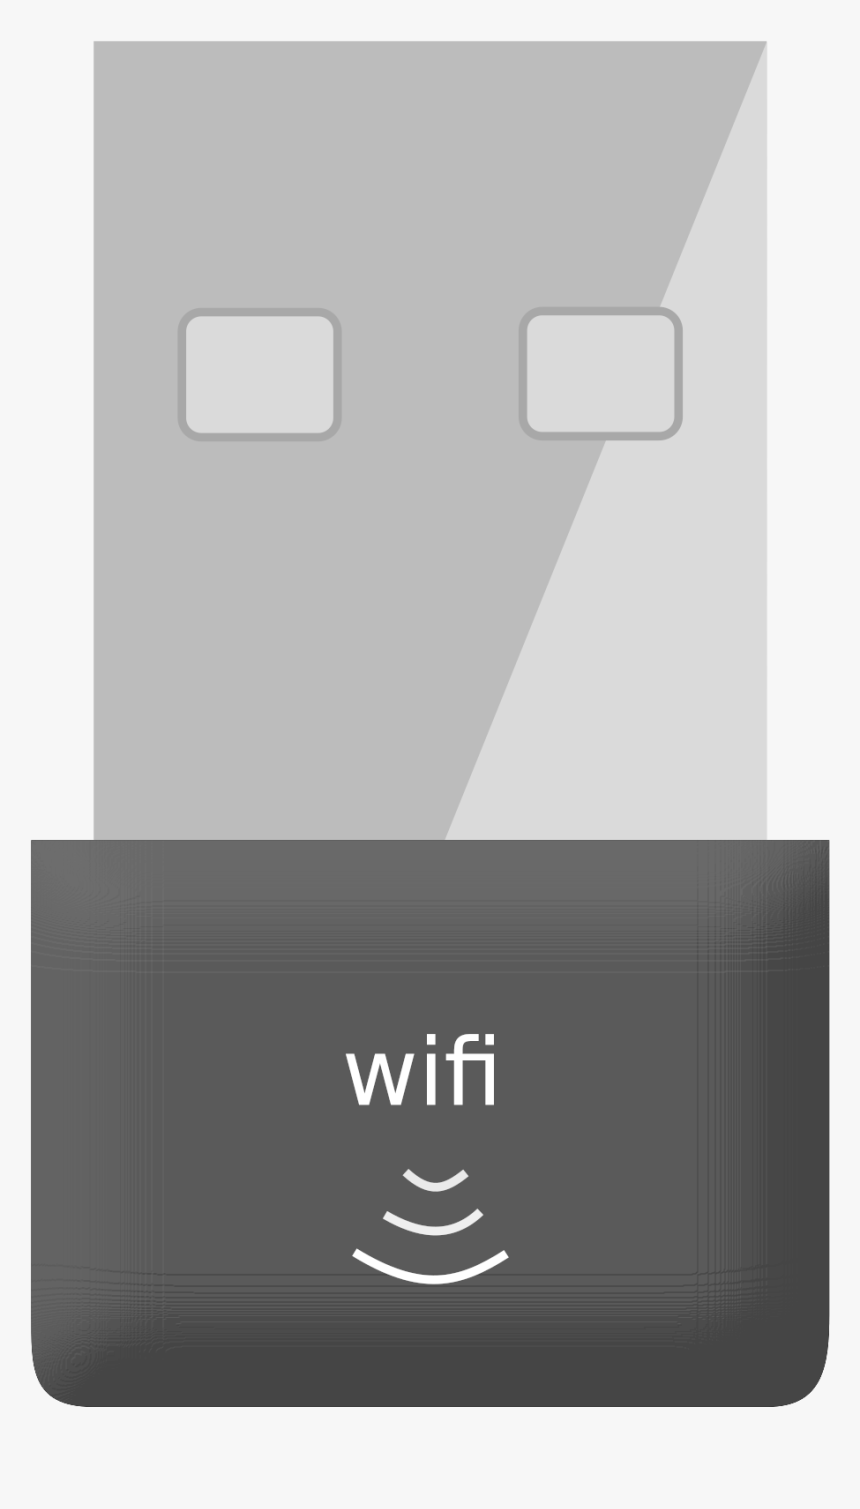 Wifi Usb Emitter - Wifi Dongle Png